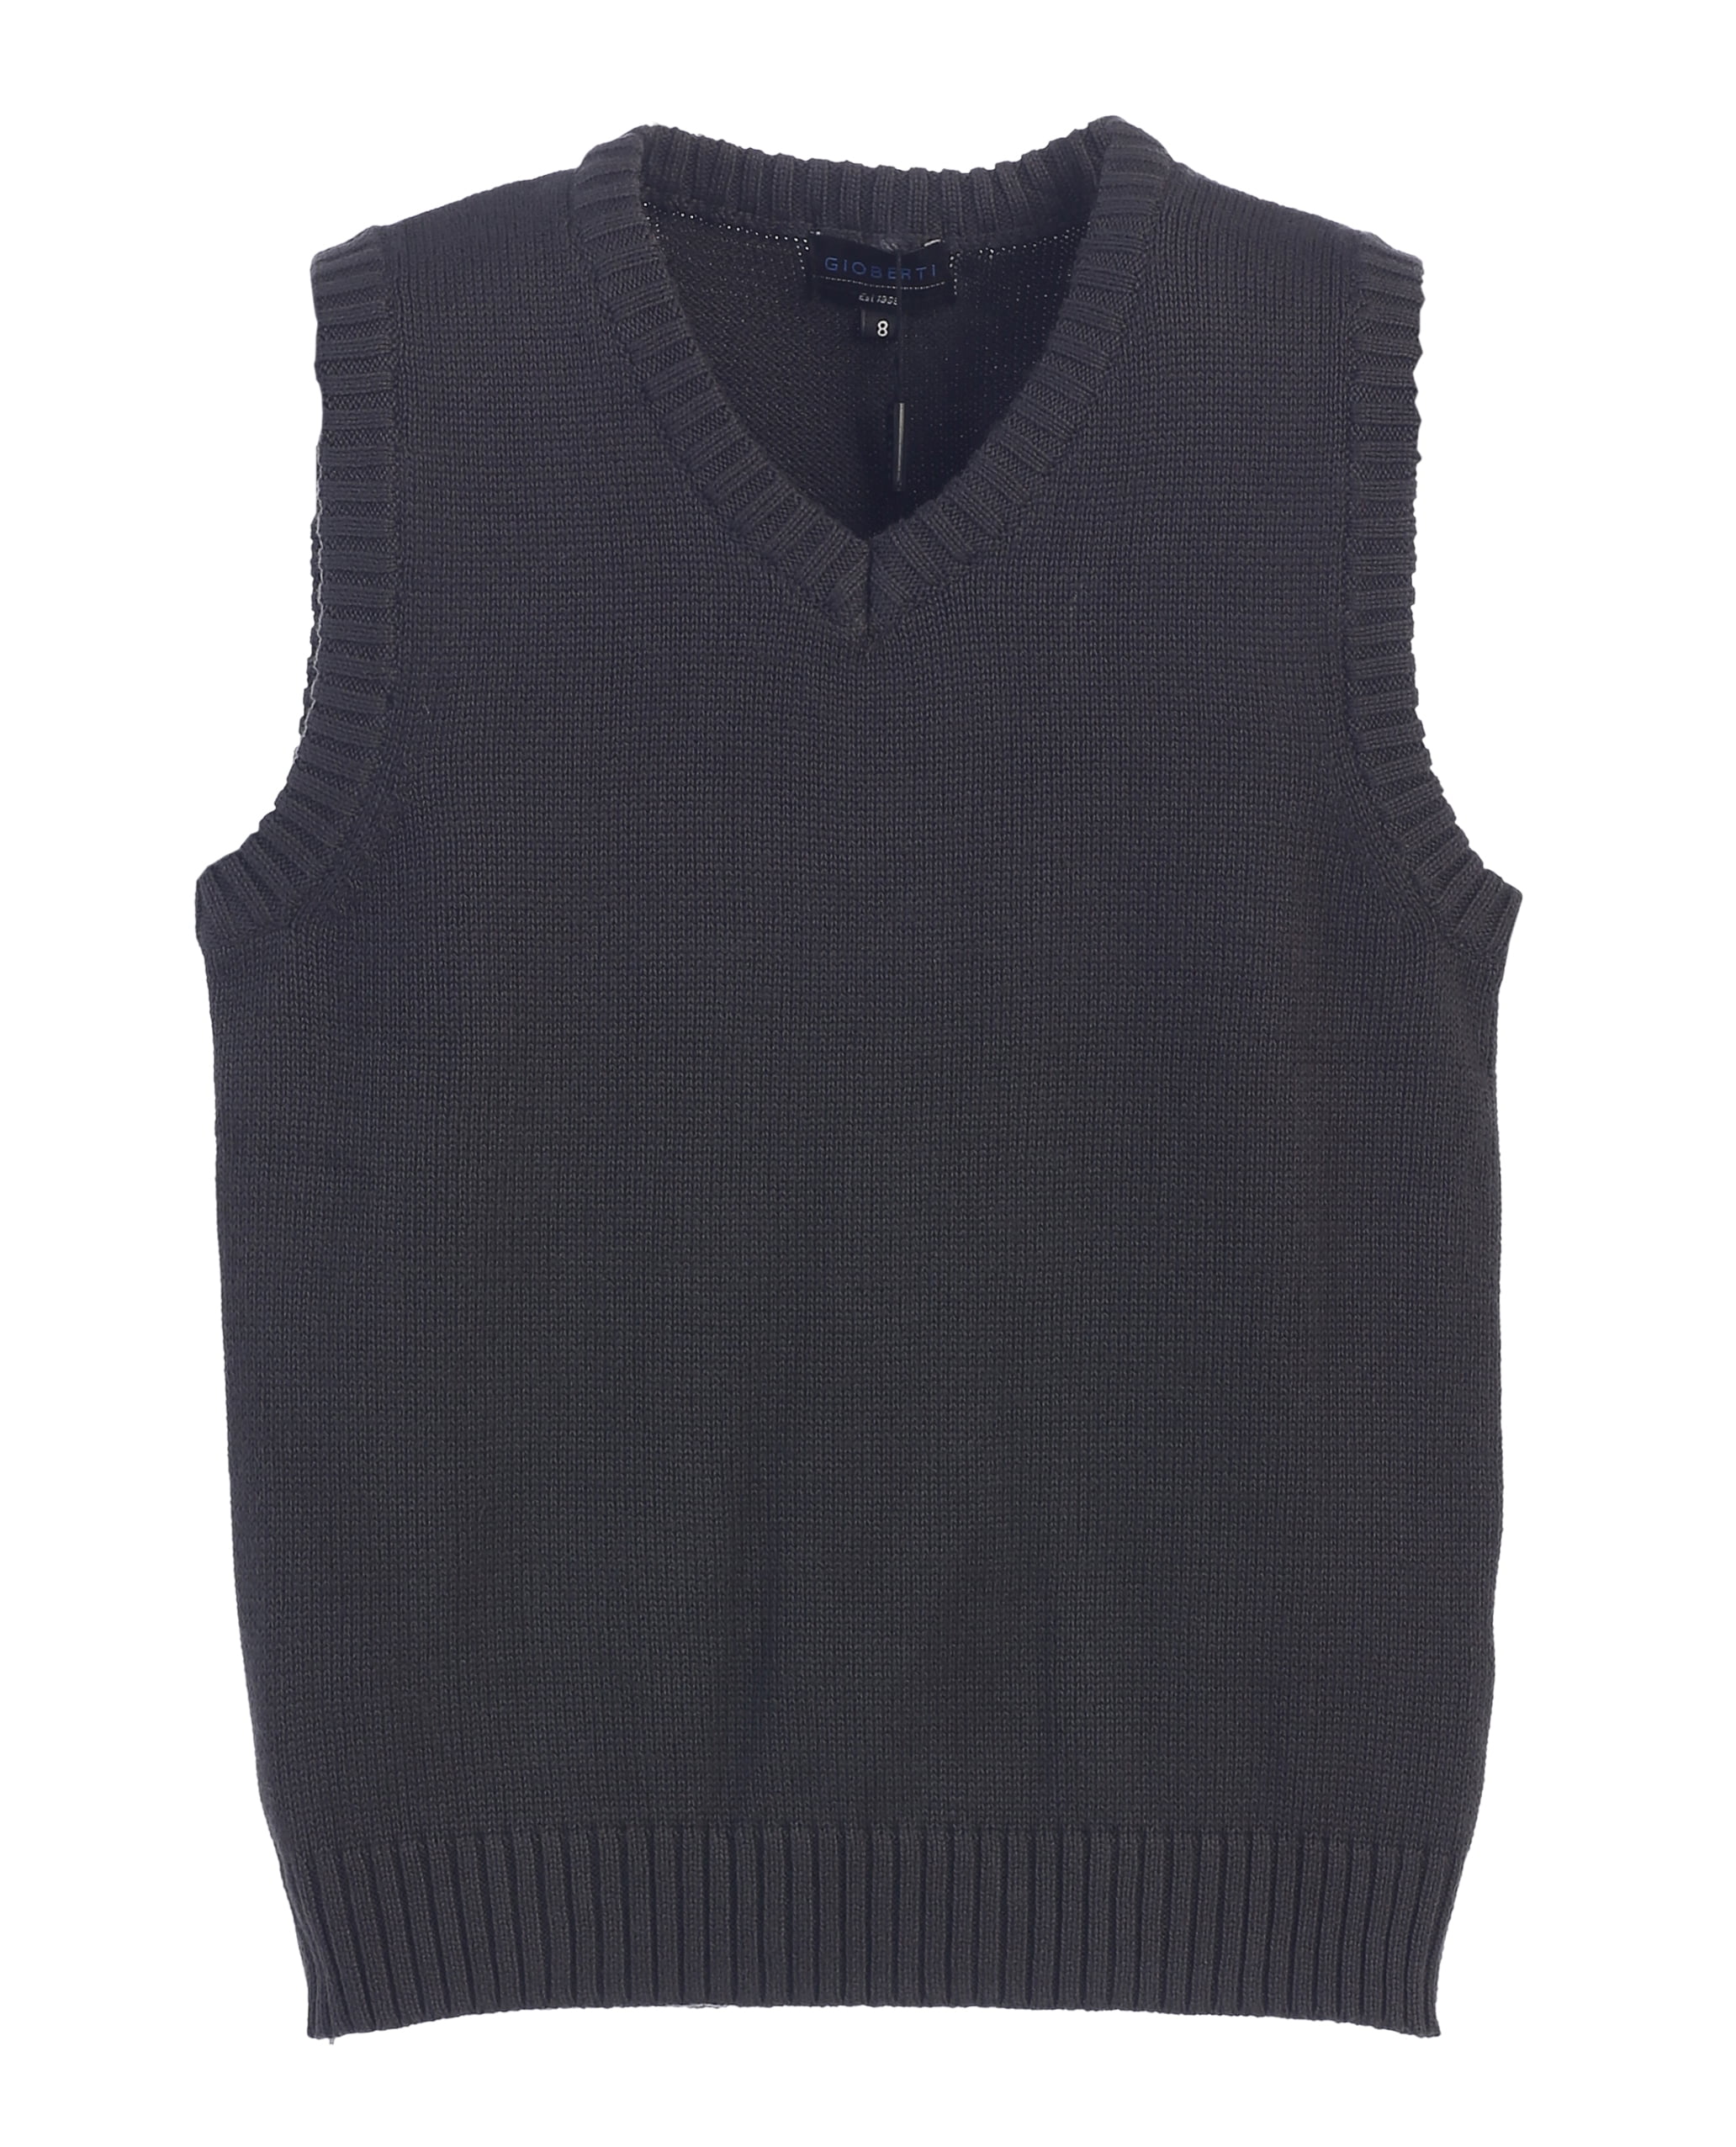 Gioberti Boy's V-Neck 100% Cotton Knitted Pullover Sweater Vest 